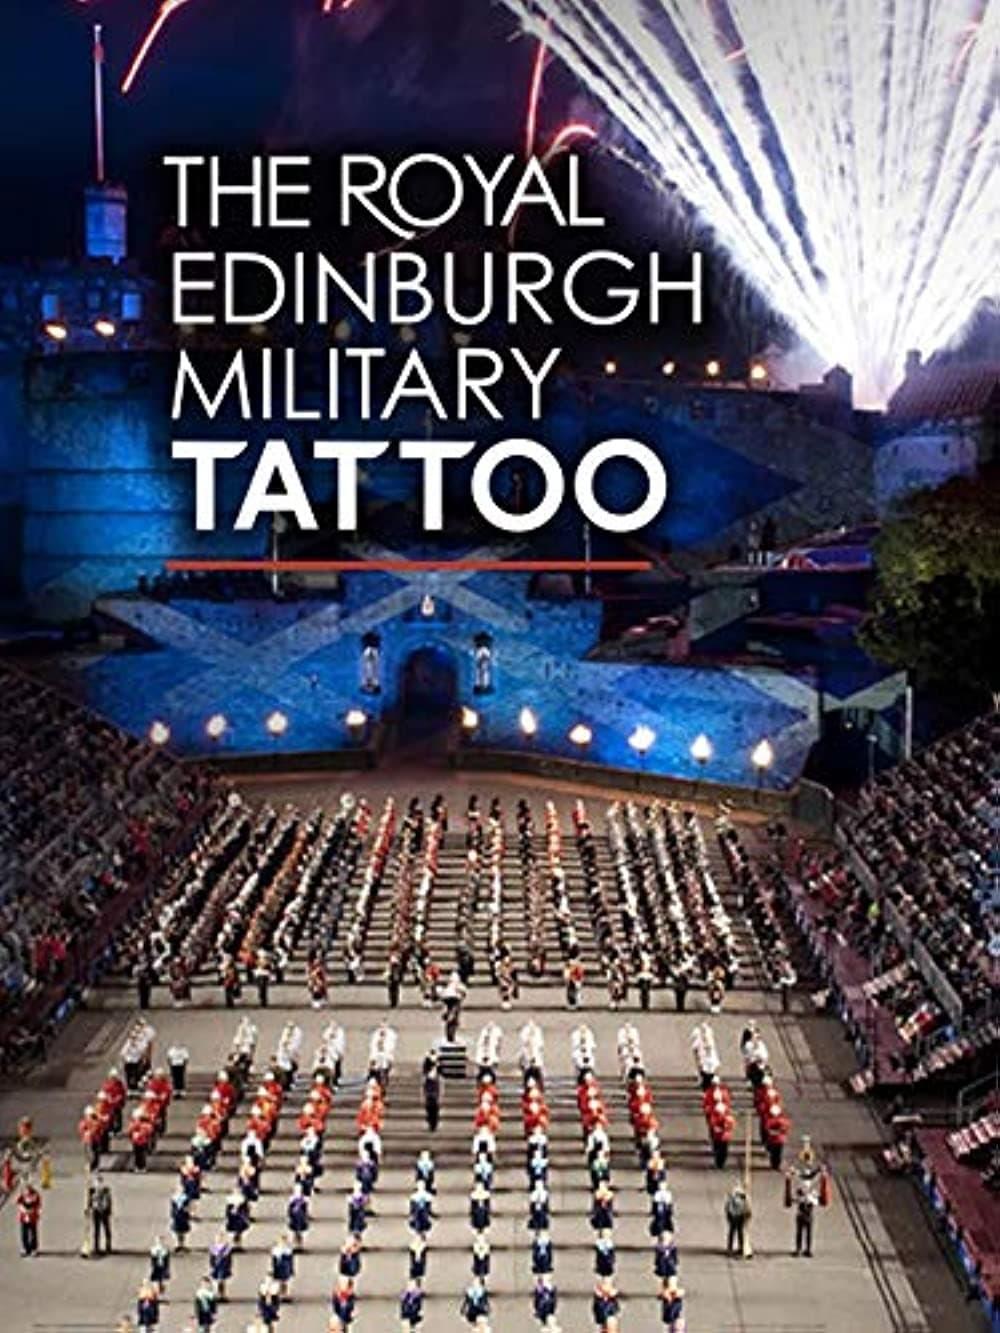 The Royal Edinburgh Military Tattoo poster